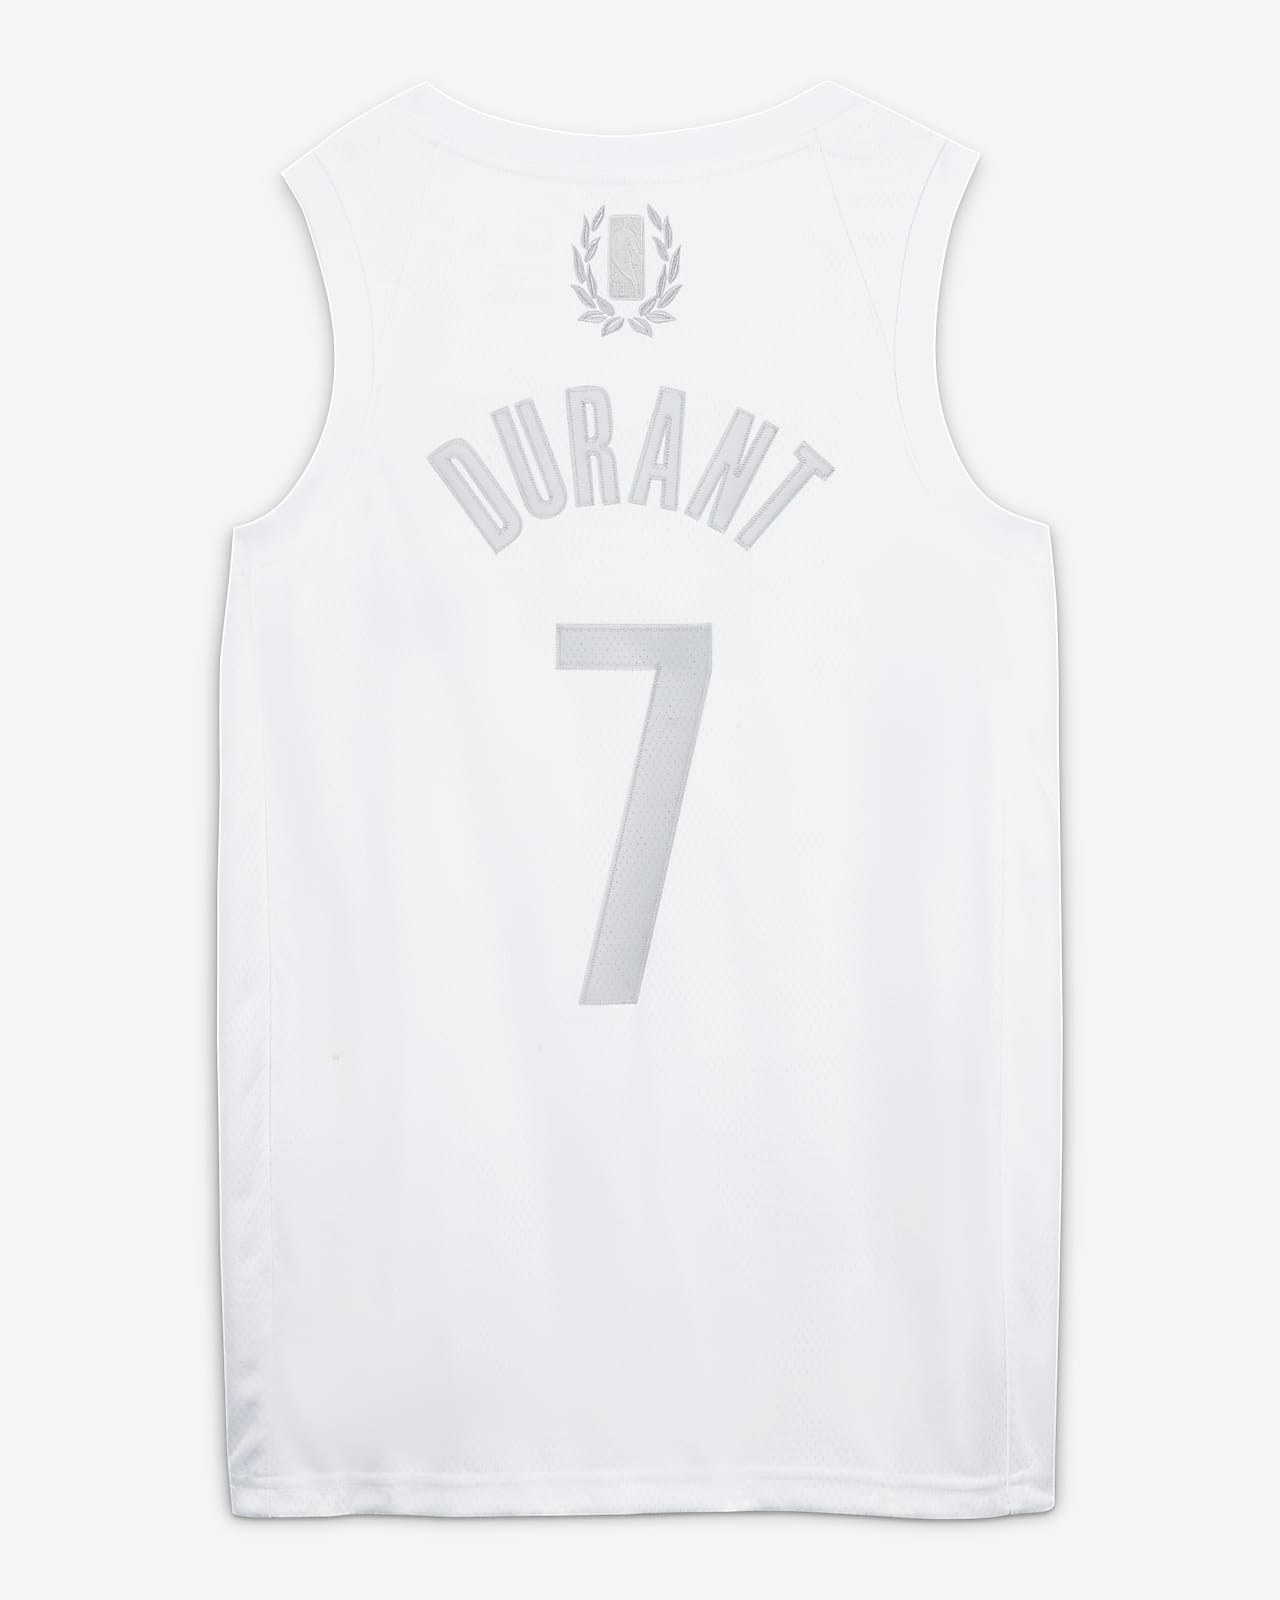 Kevin Durant Nets MVP Men's Nike NBA 